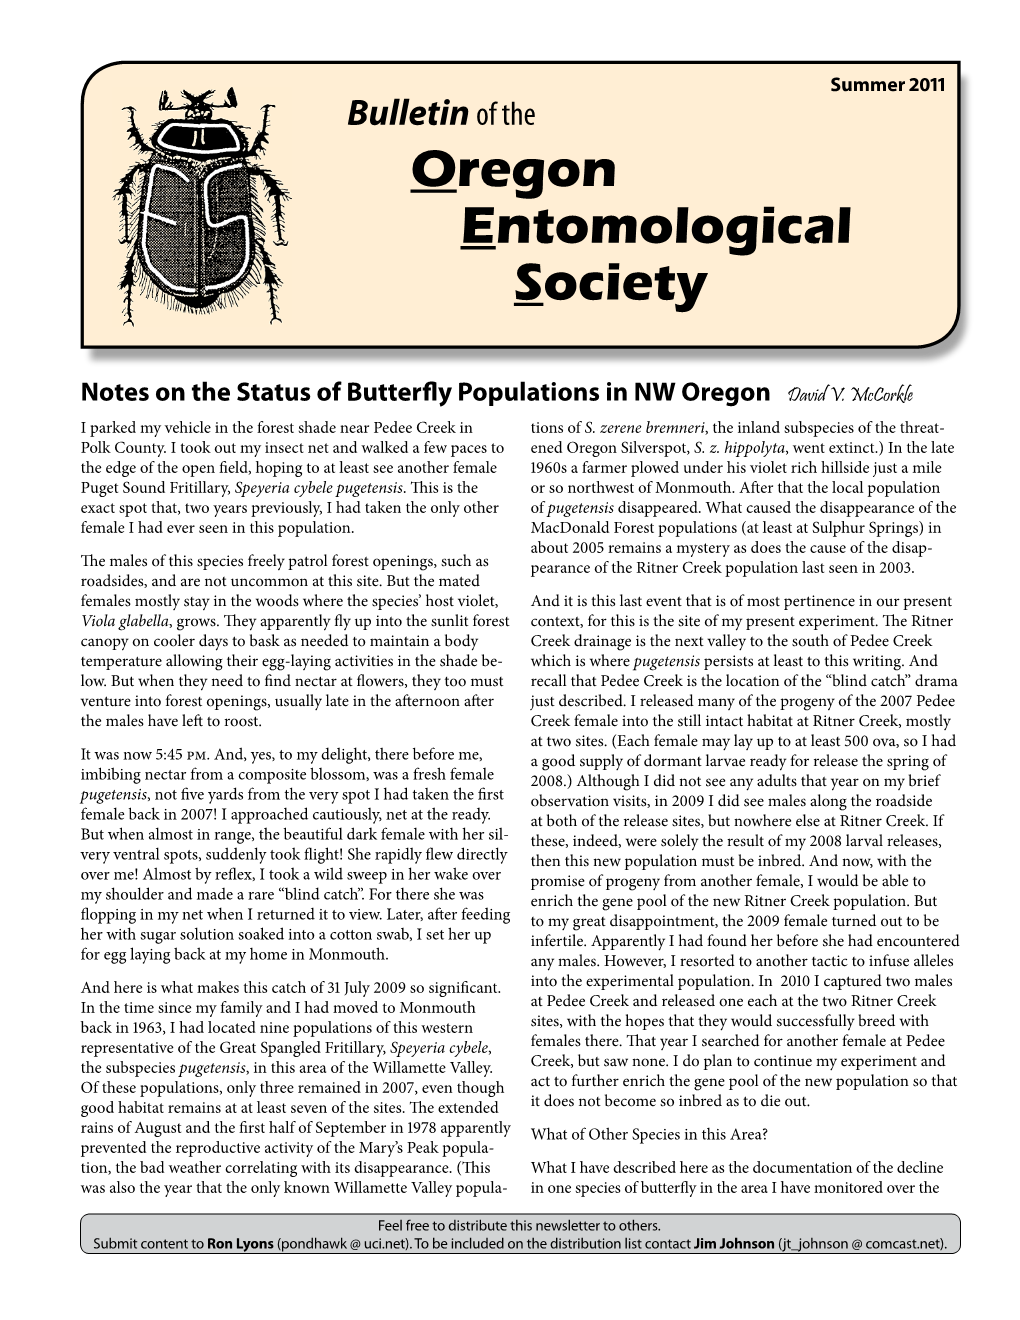 Summer 2011 Bulletin of the Oregon Entomological Society